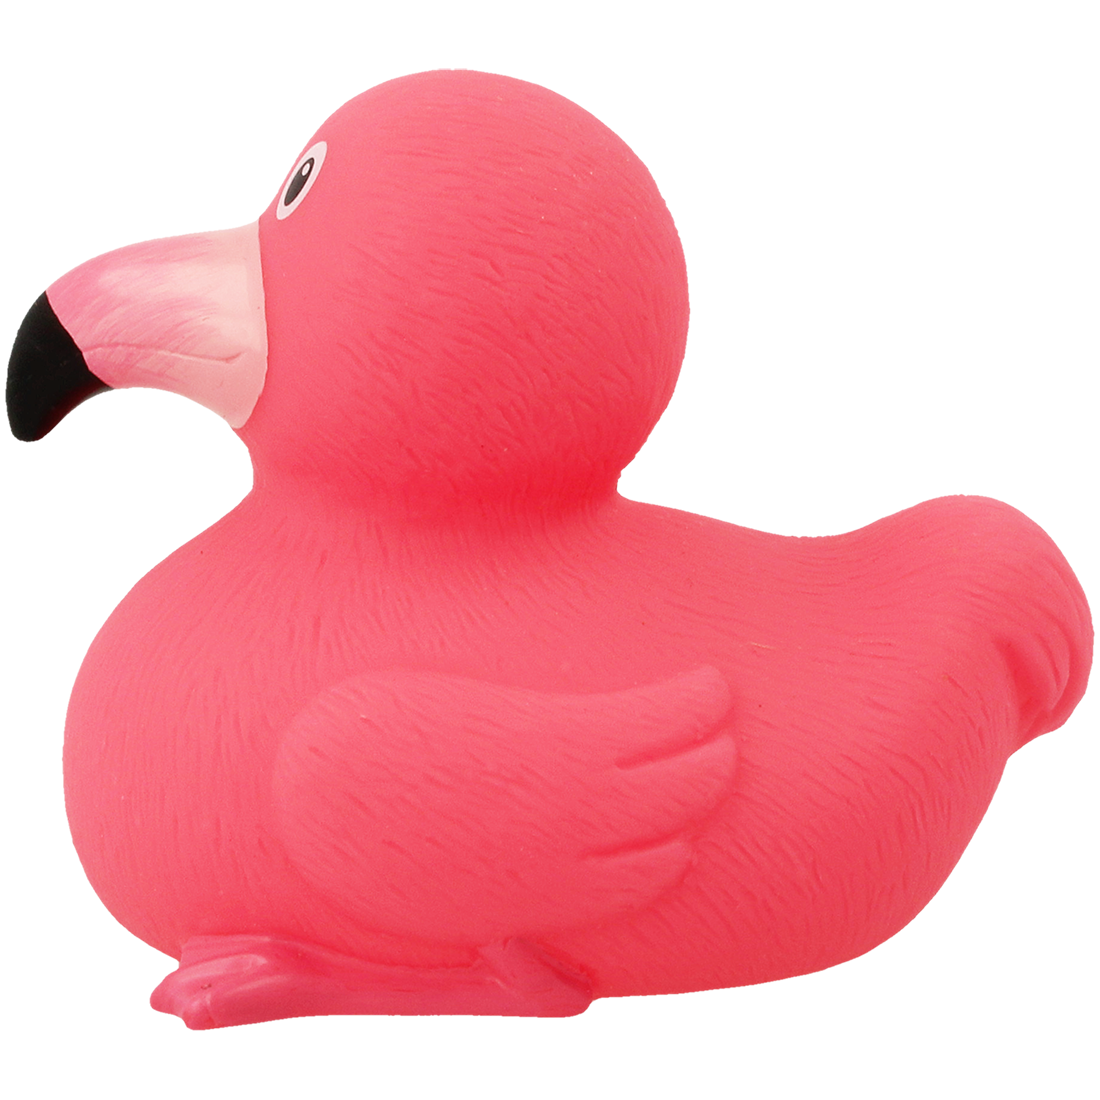 https://dawo-shop.com/wp-content/uploads/2021/01/lilalu-quietscheente-flamingo-rubber-duck-L.png